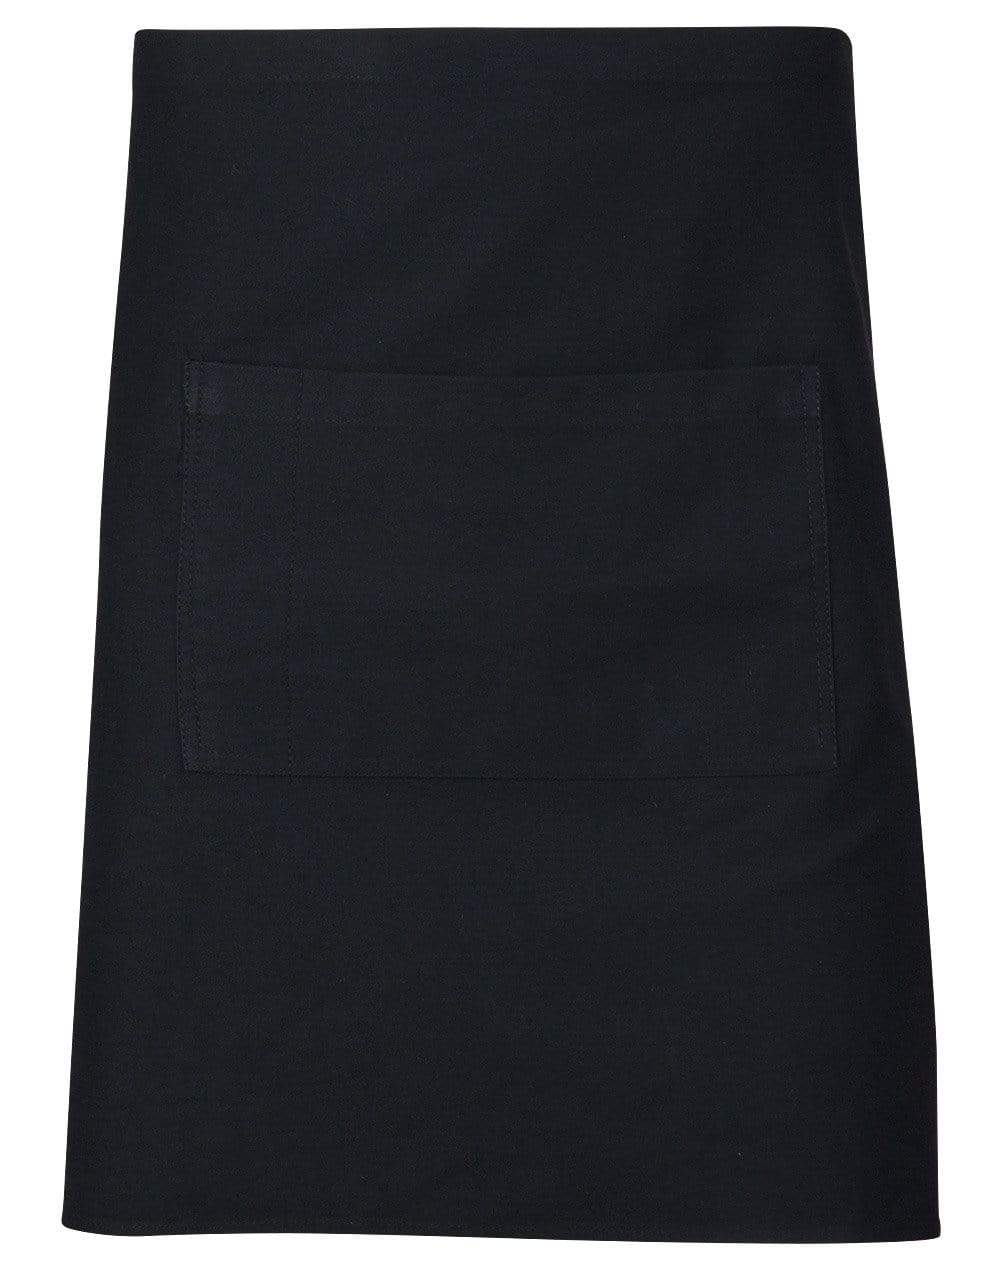 Short-waist-apron AP01 Hospitality & Chefwear Australian Industrial Wear W 86cm x H 50cm Black 